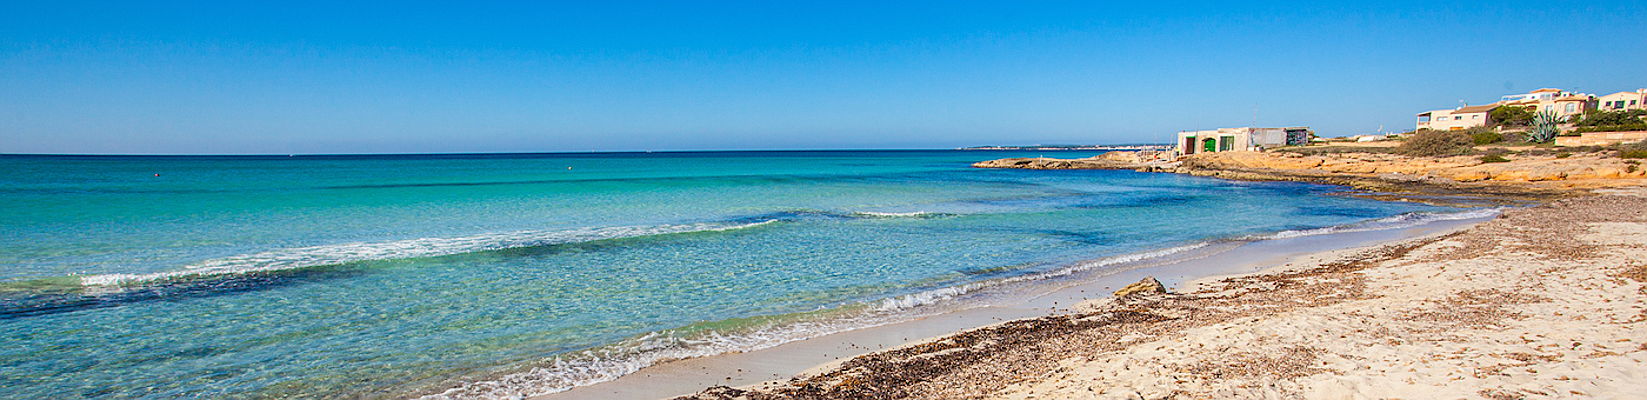  Balearic Islands
- Beach in the area of Santanyi